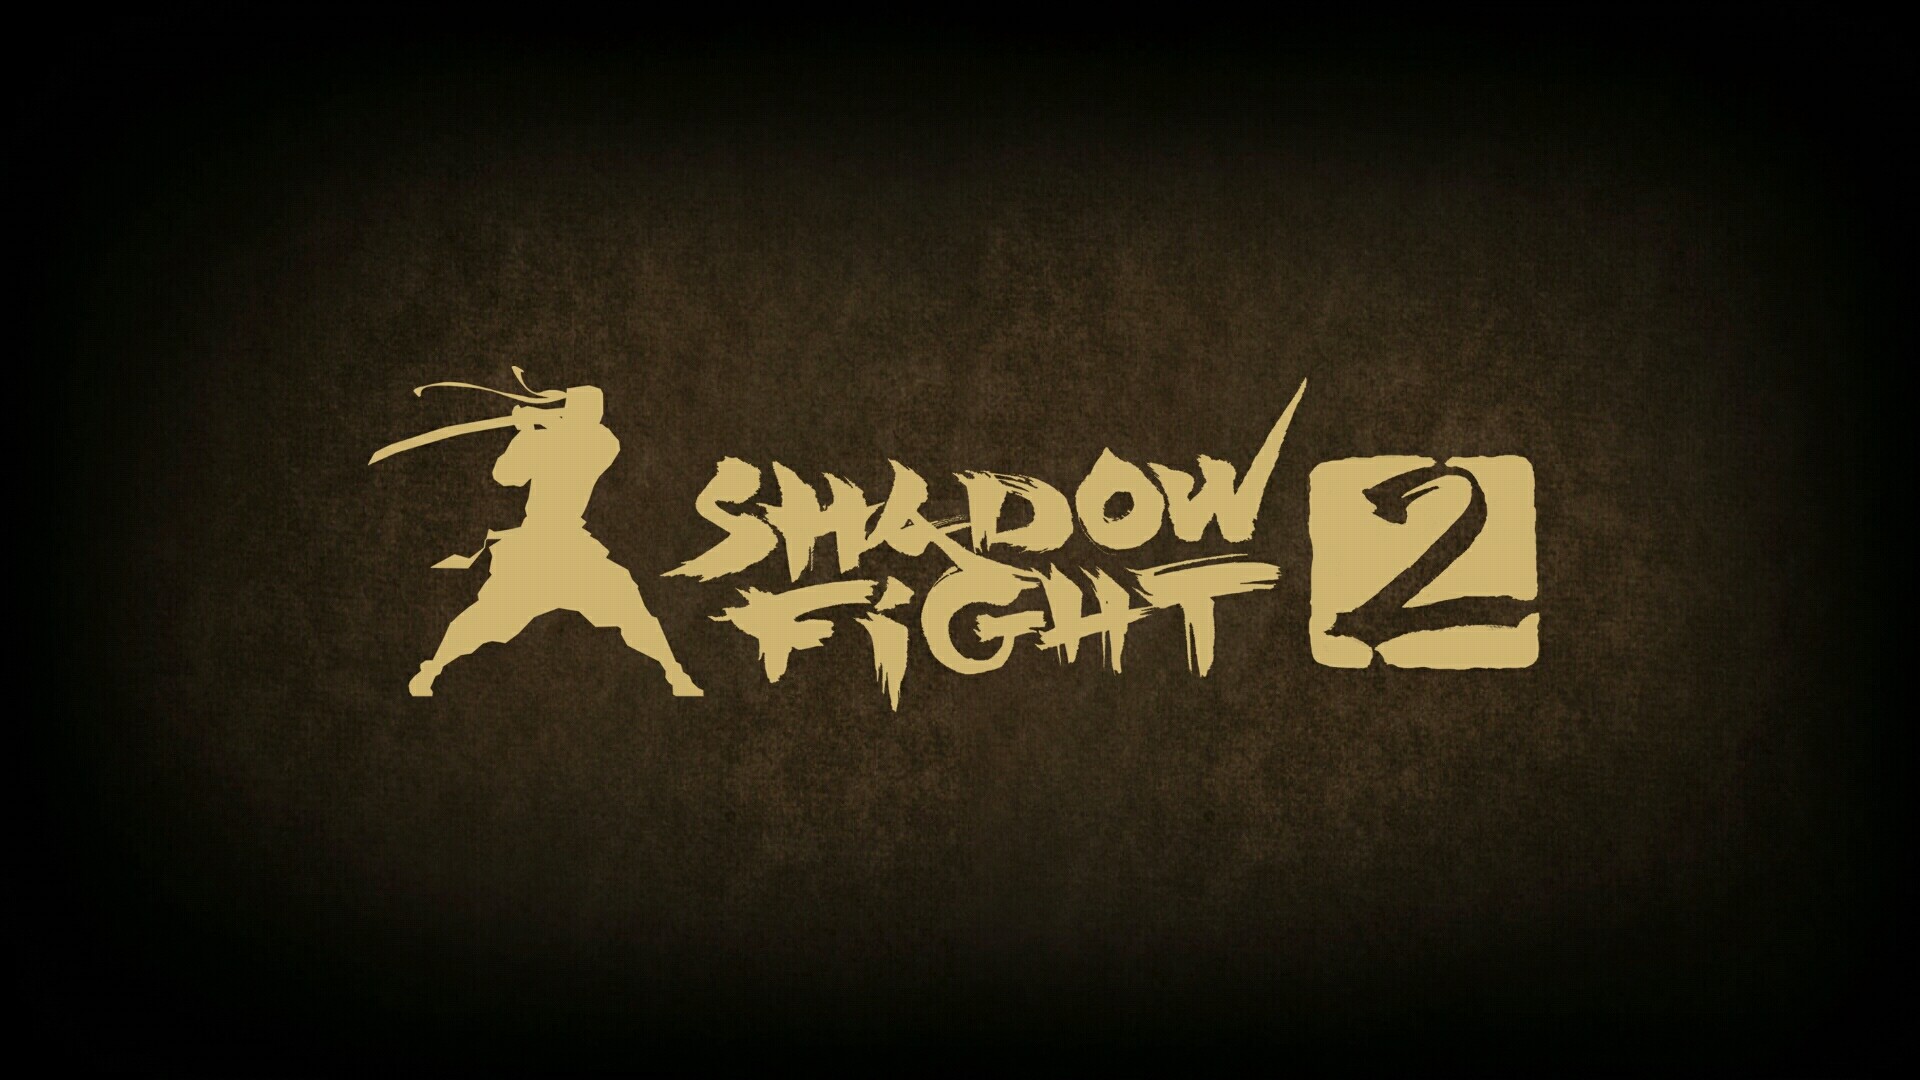 Shadow fight arena дата выхода в steam фото 47